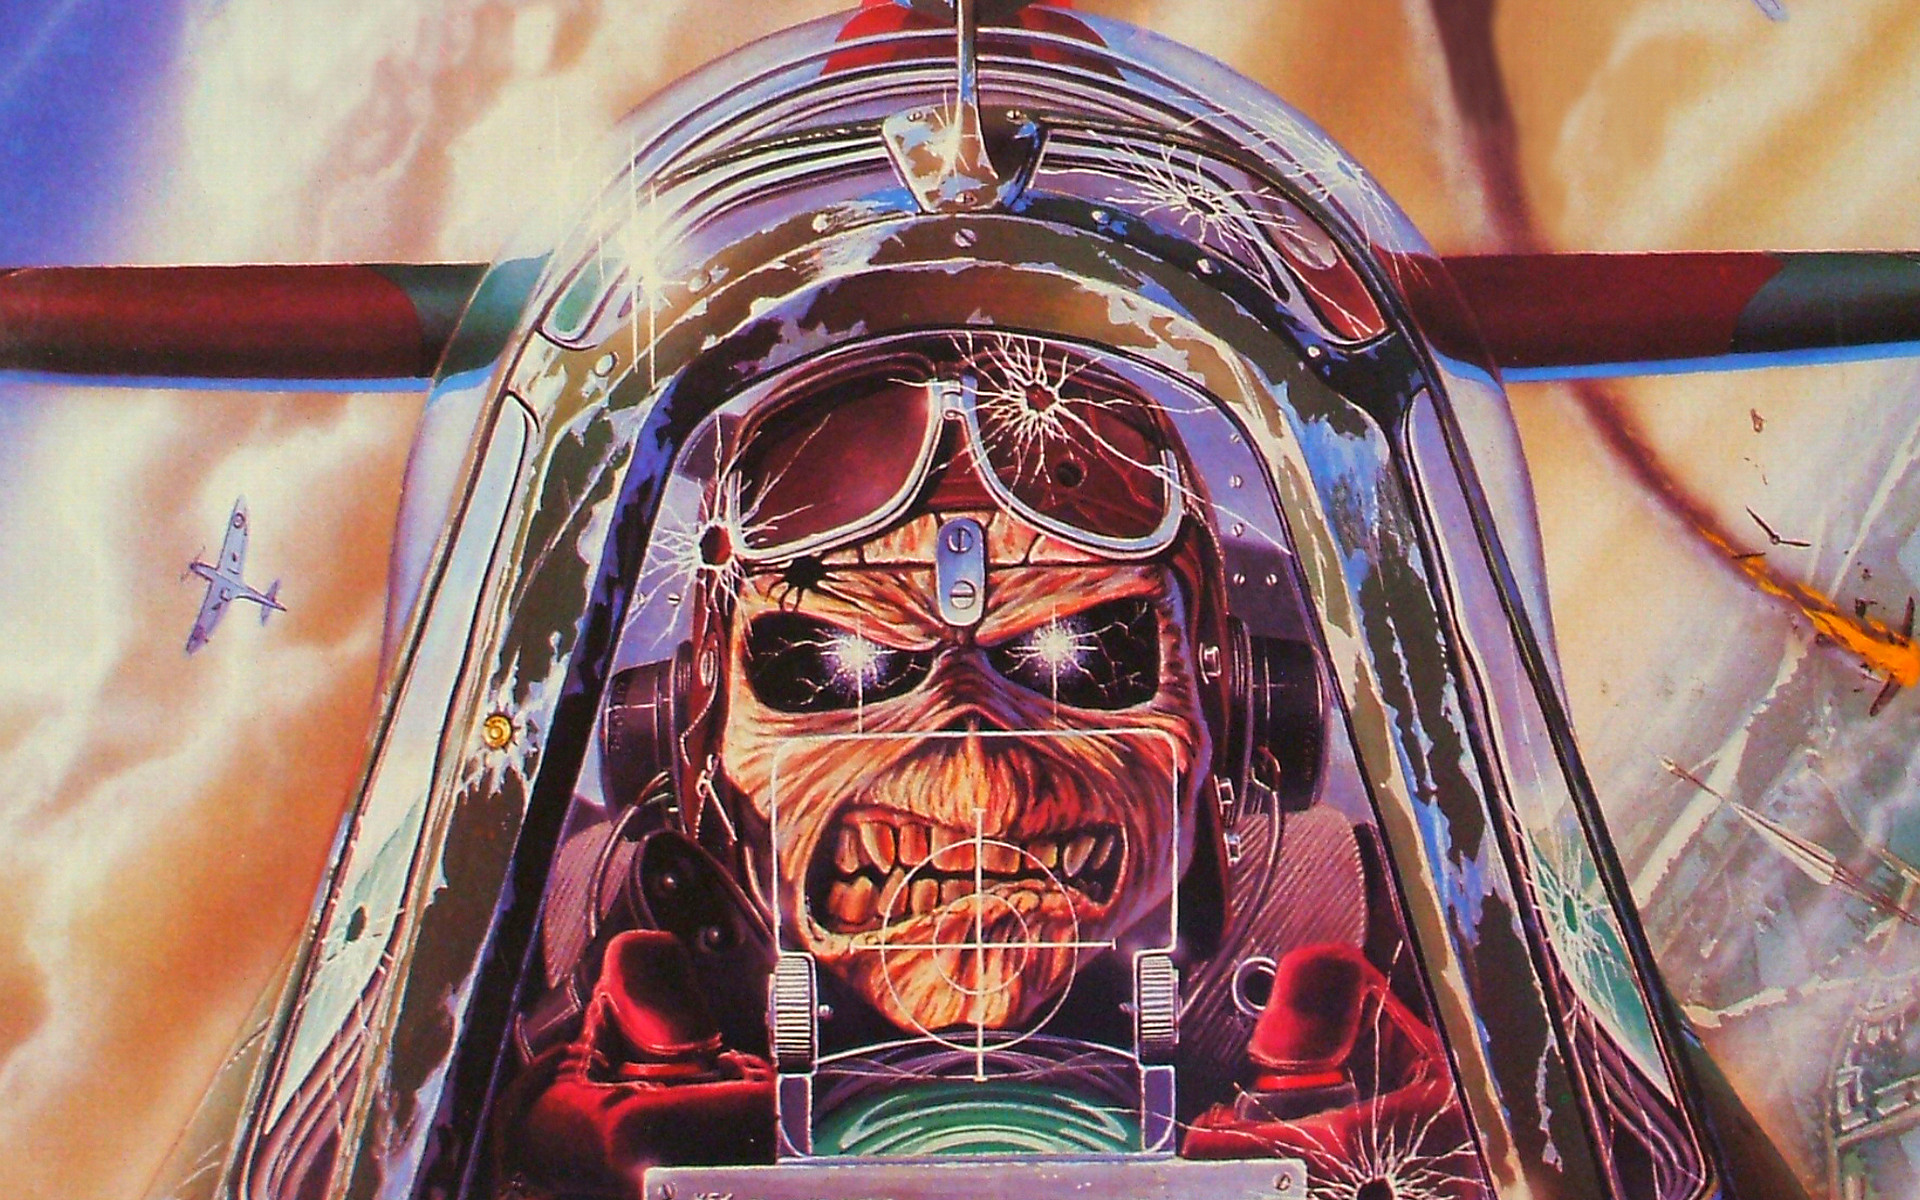 1920x1200 Iron Maiden, Eddie the Head, music bands - Free Wallpaper / WallpaperJam.com